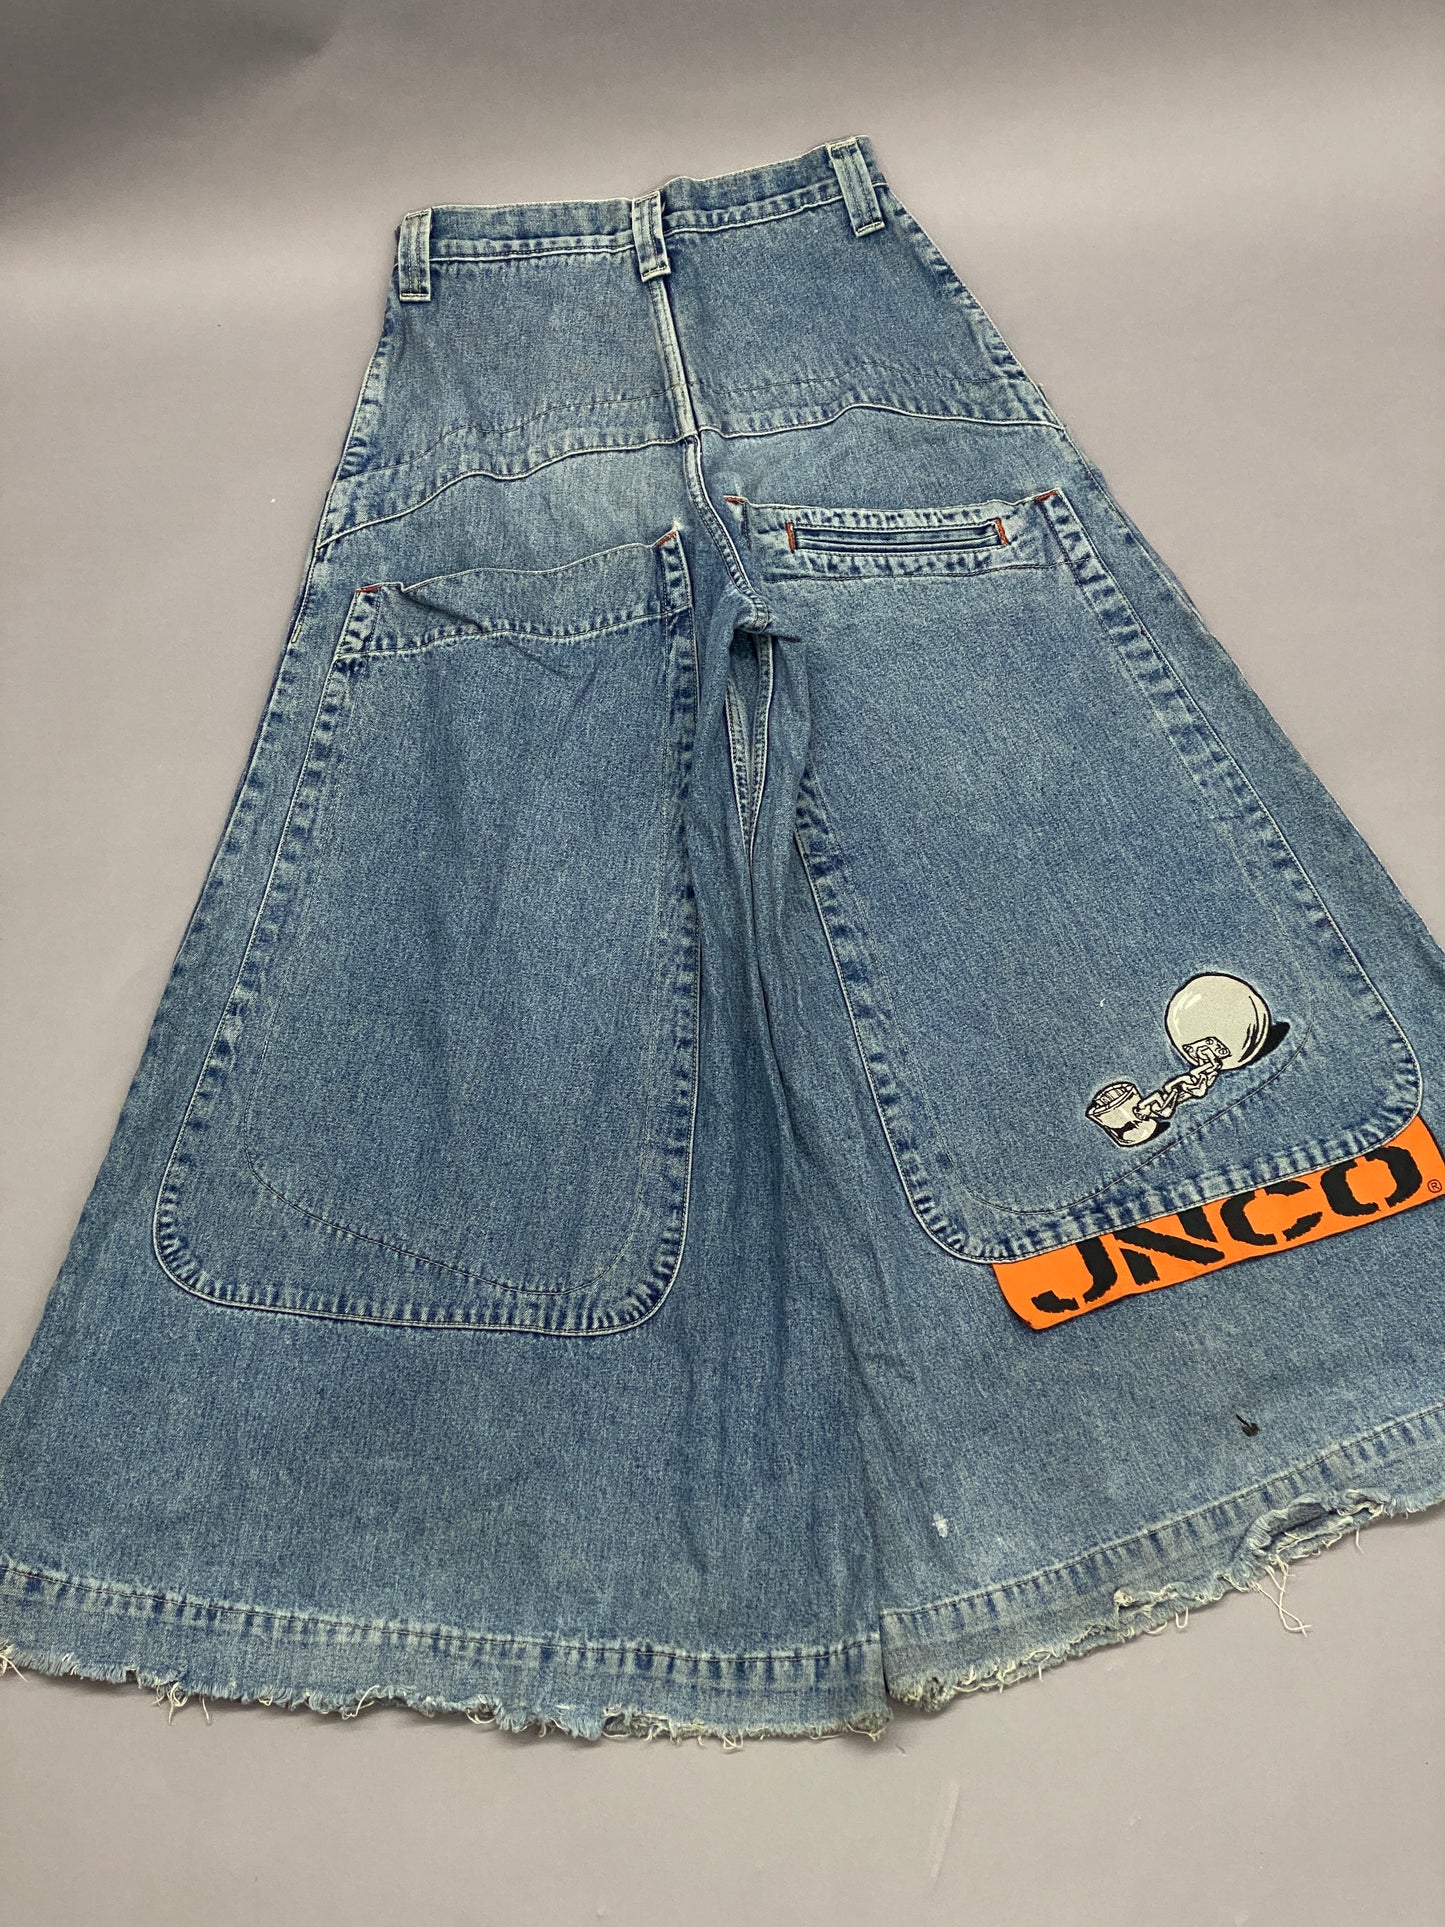 JNCO Convict 50 Vintage Jeans - 28 – Ropa Chidx